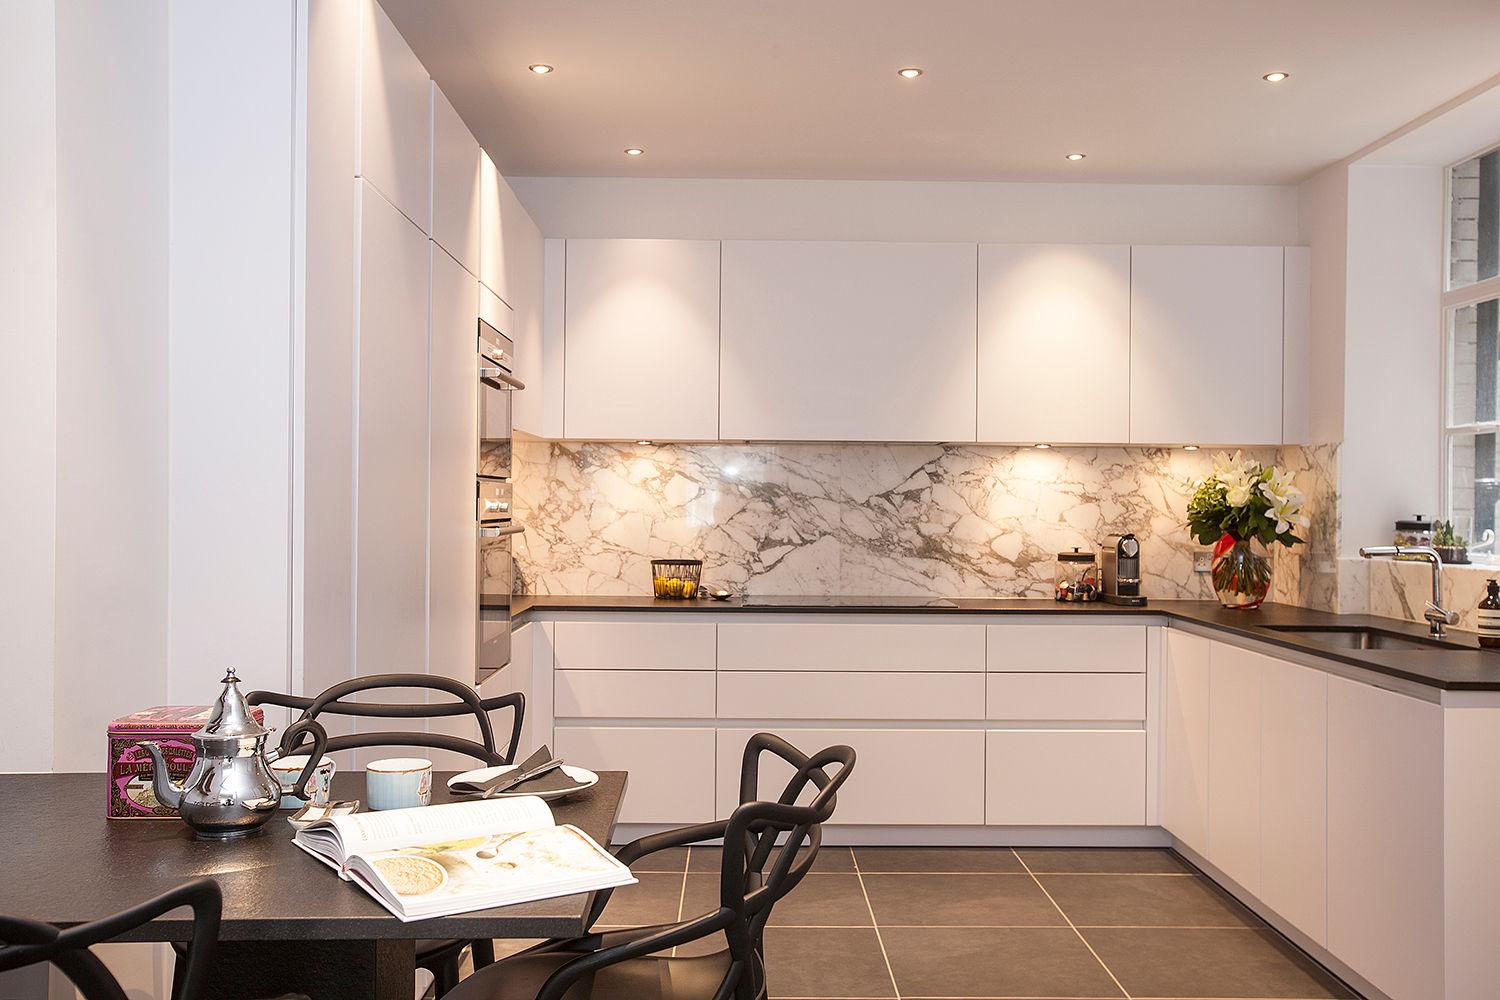 Kensington Church Street Kitchen - After SWM Interiors & Sourcing Ltd Modern Kitchen